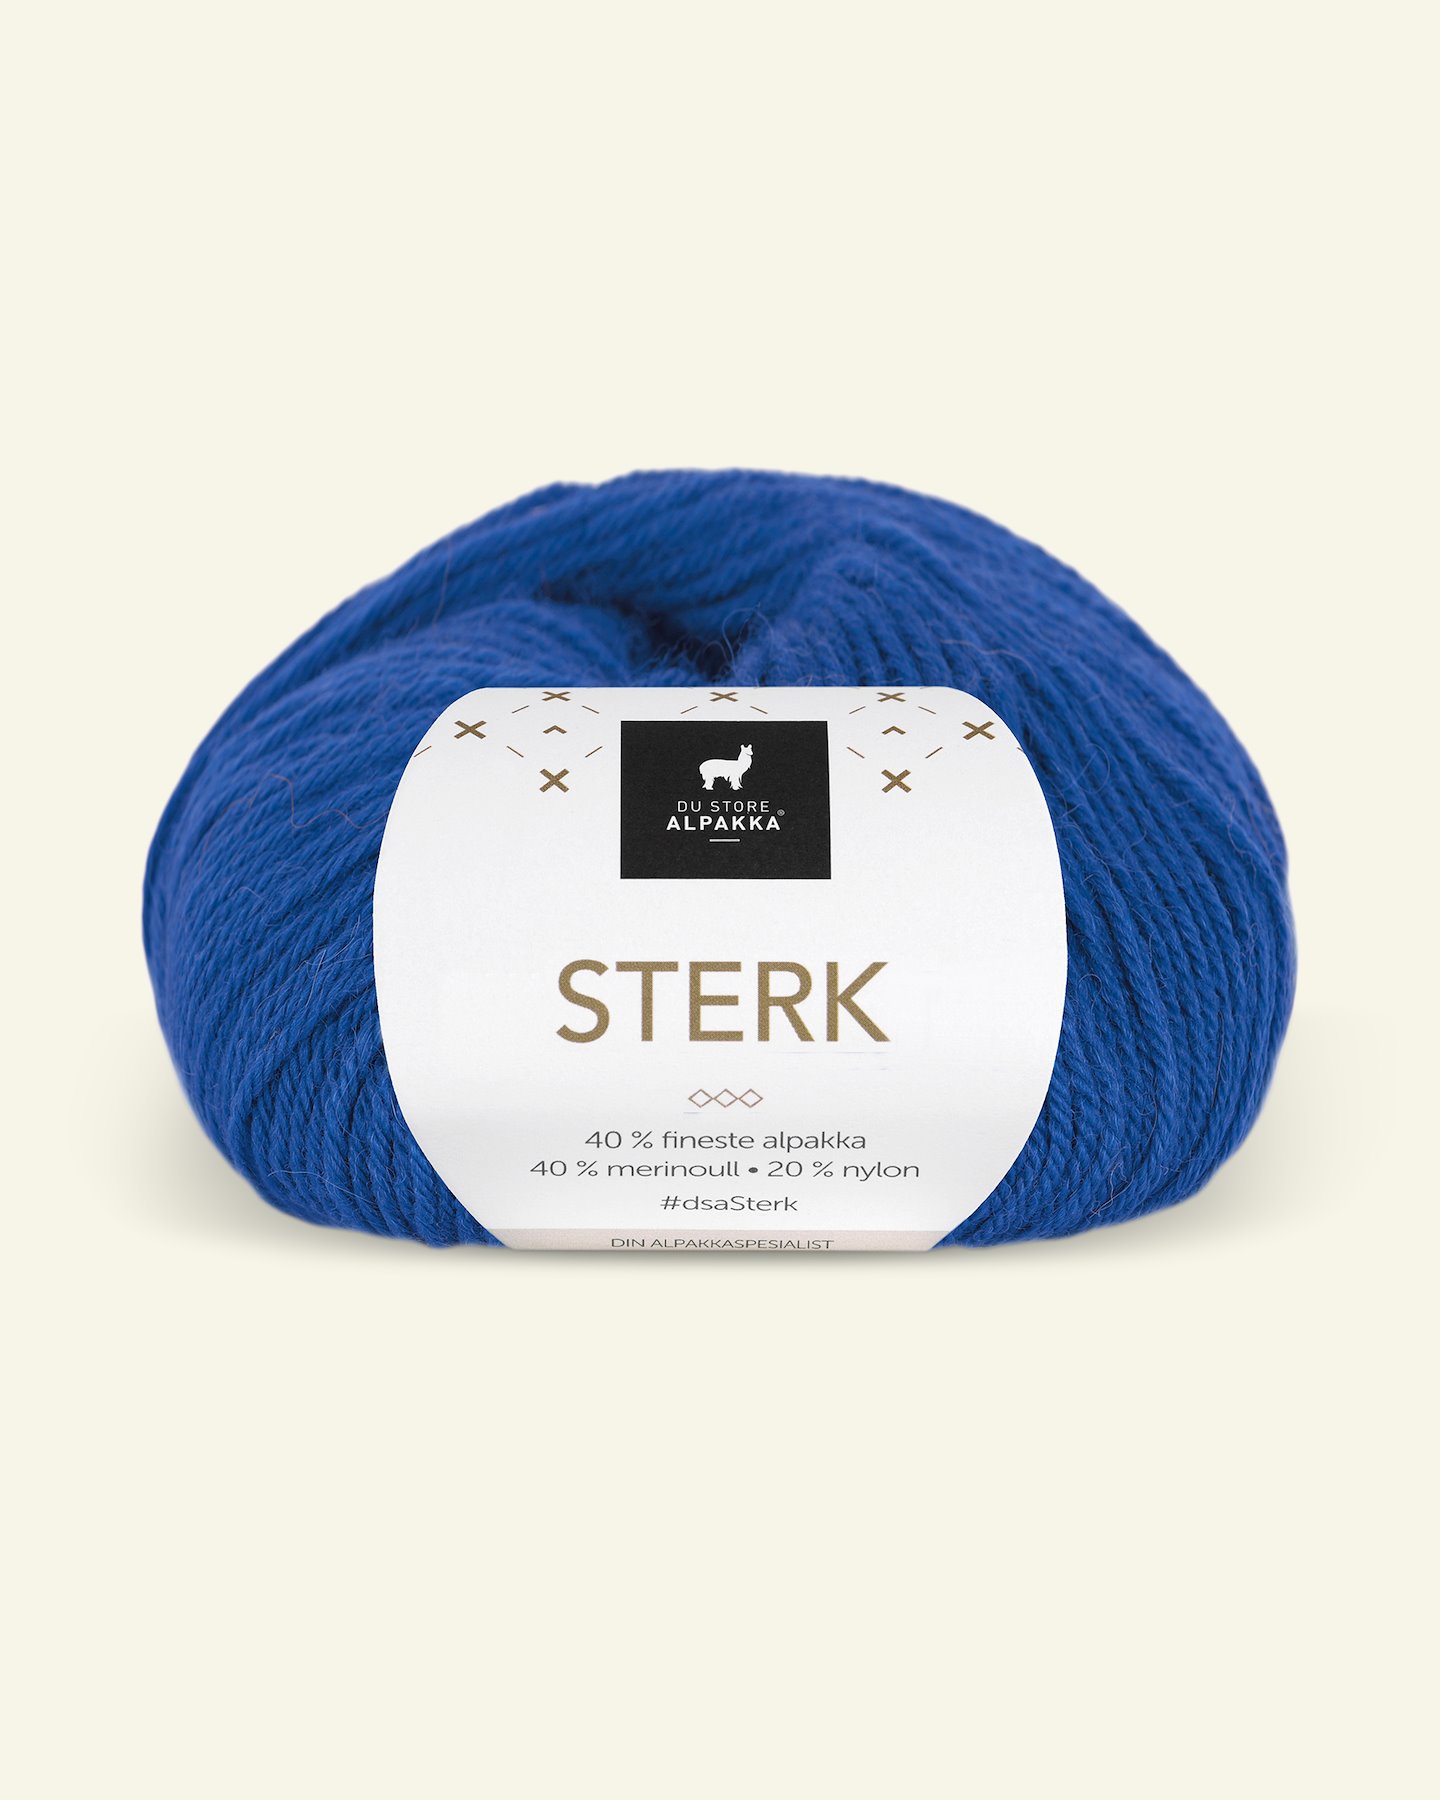 Du Store Alpakka, alpaca merino mixgarn "Sterk", cobolt blå (904) 90000696_pack